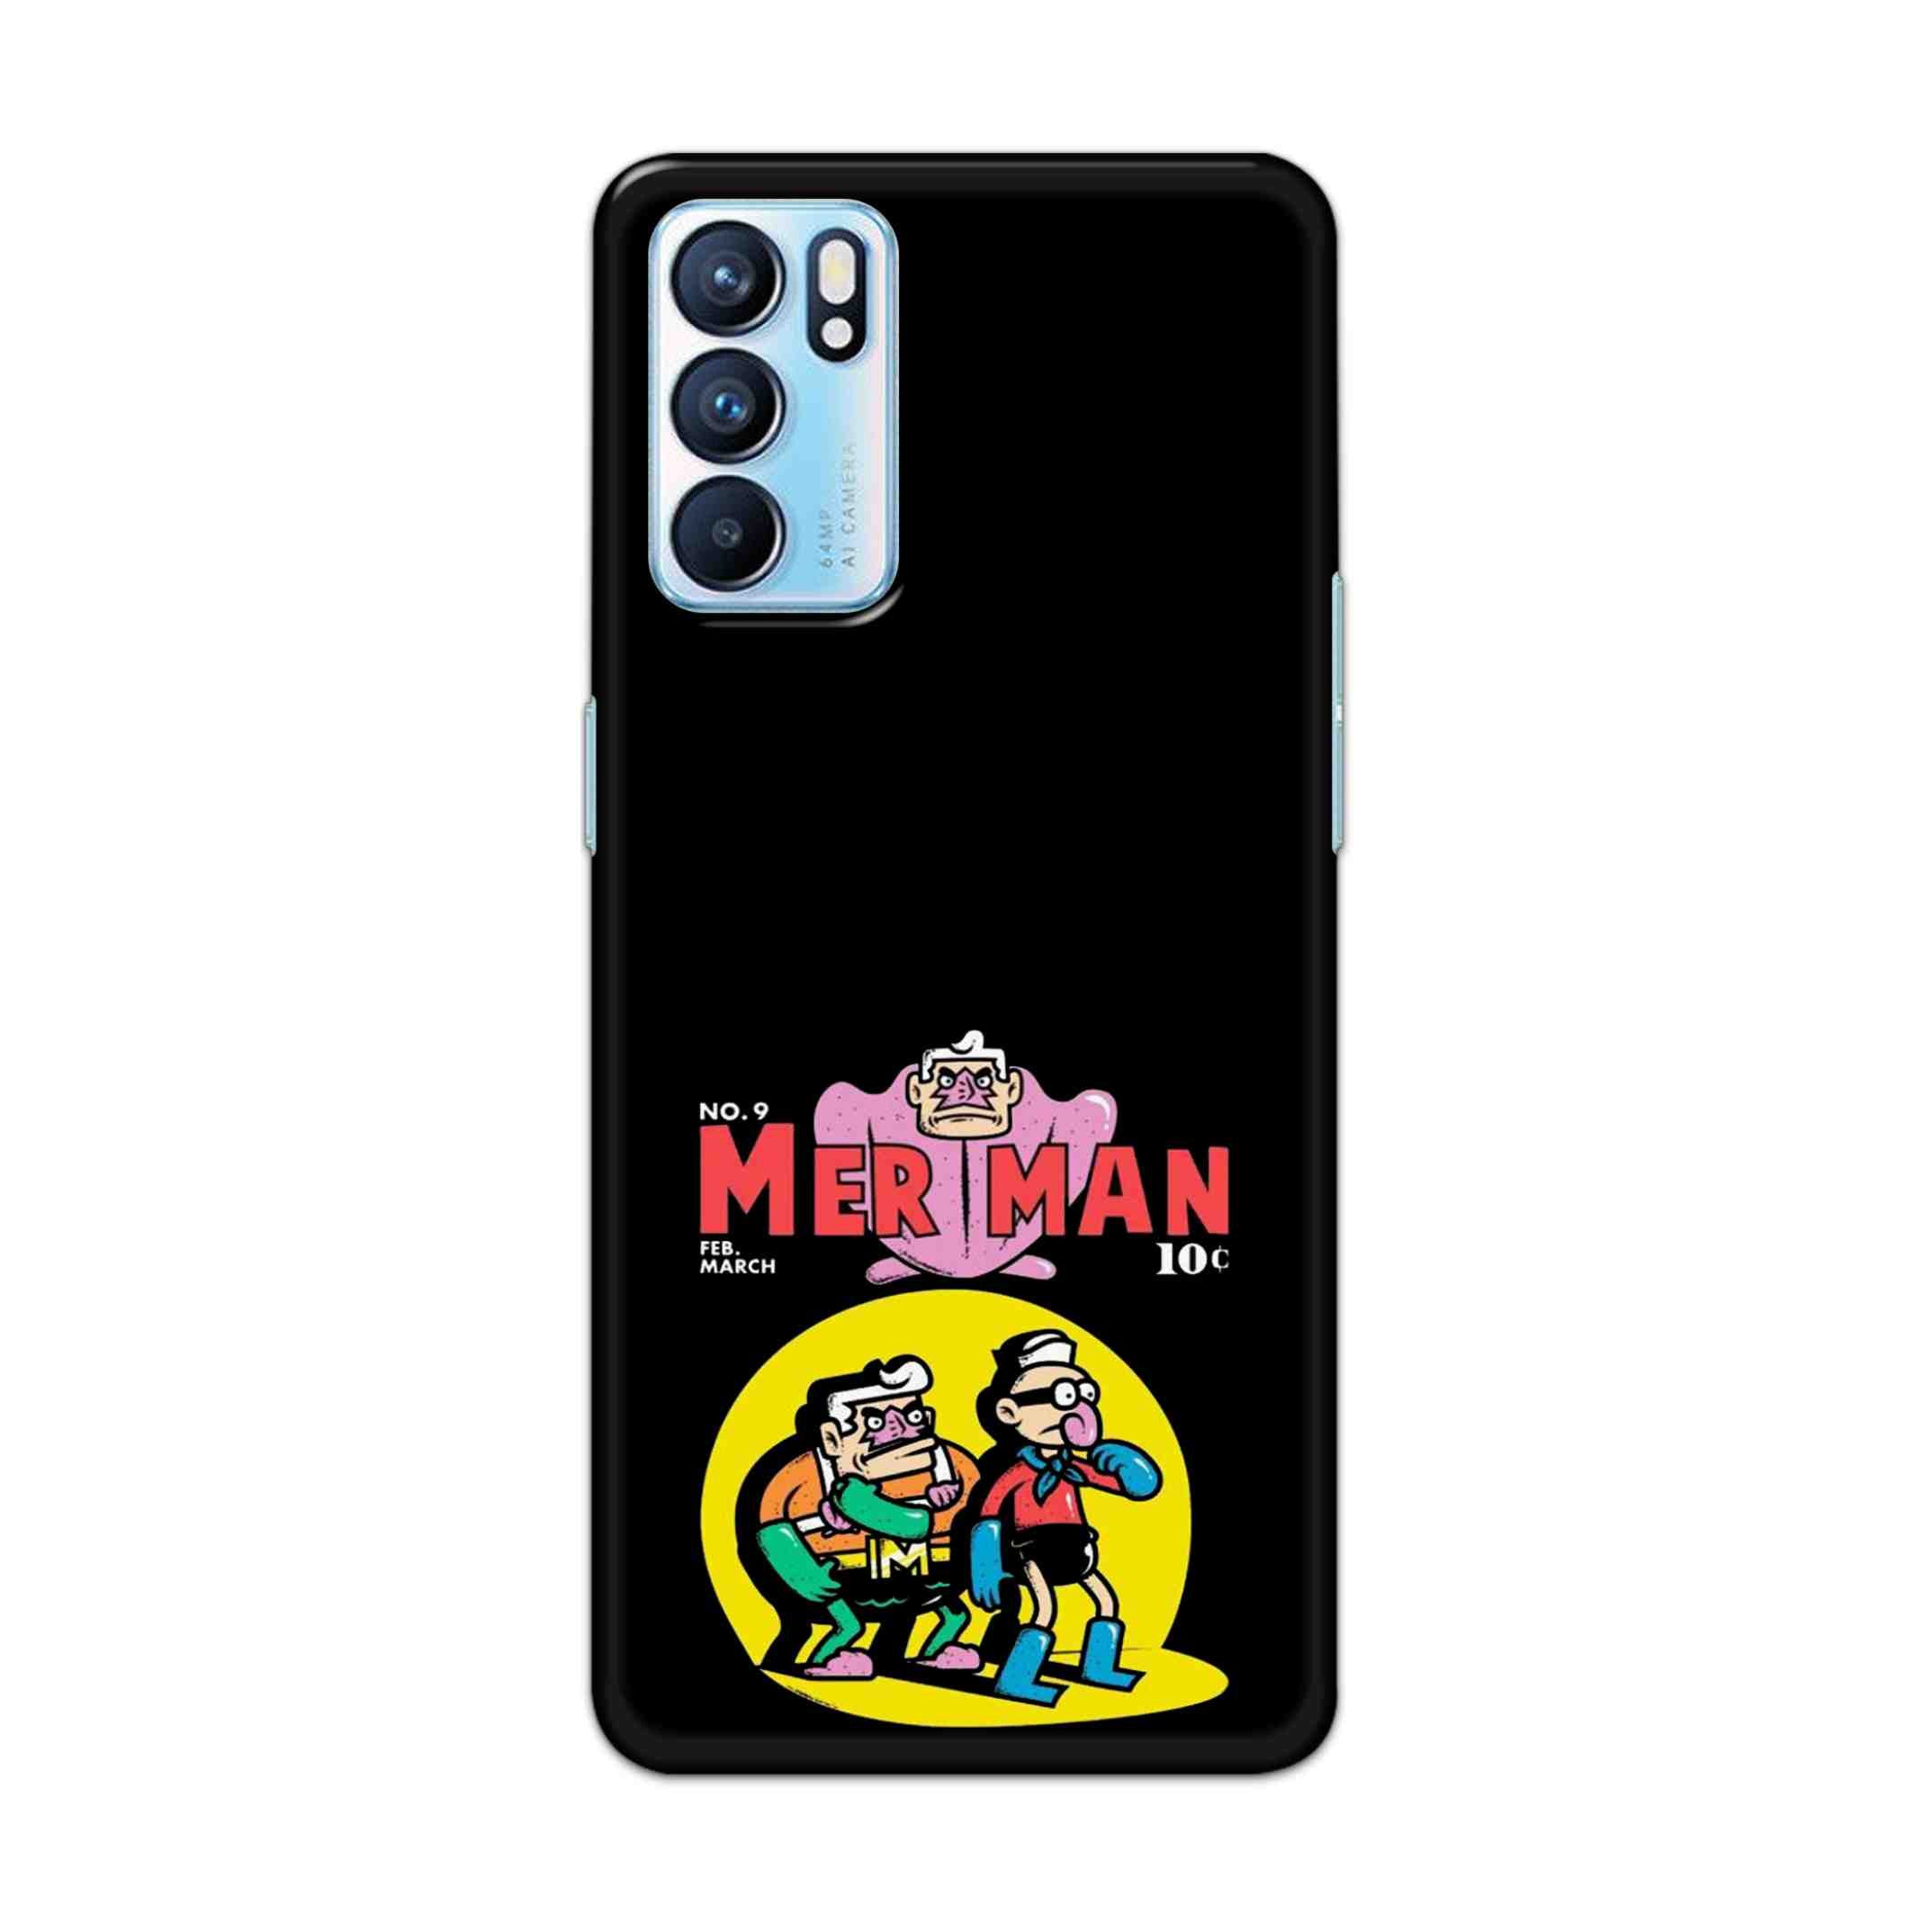 Buy Merman Hard Back Mobile Phone Case Cover For OPPO RENO 6 Online